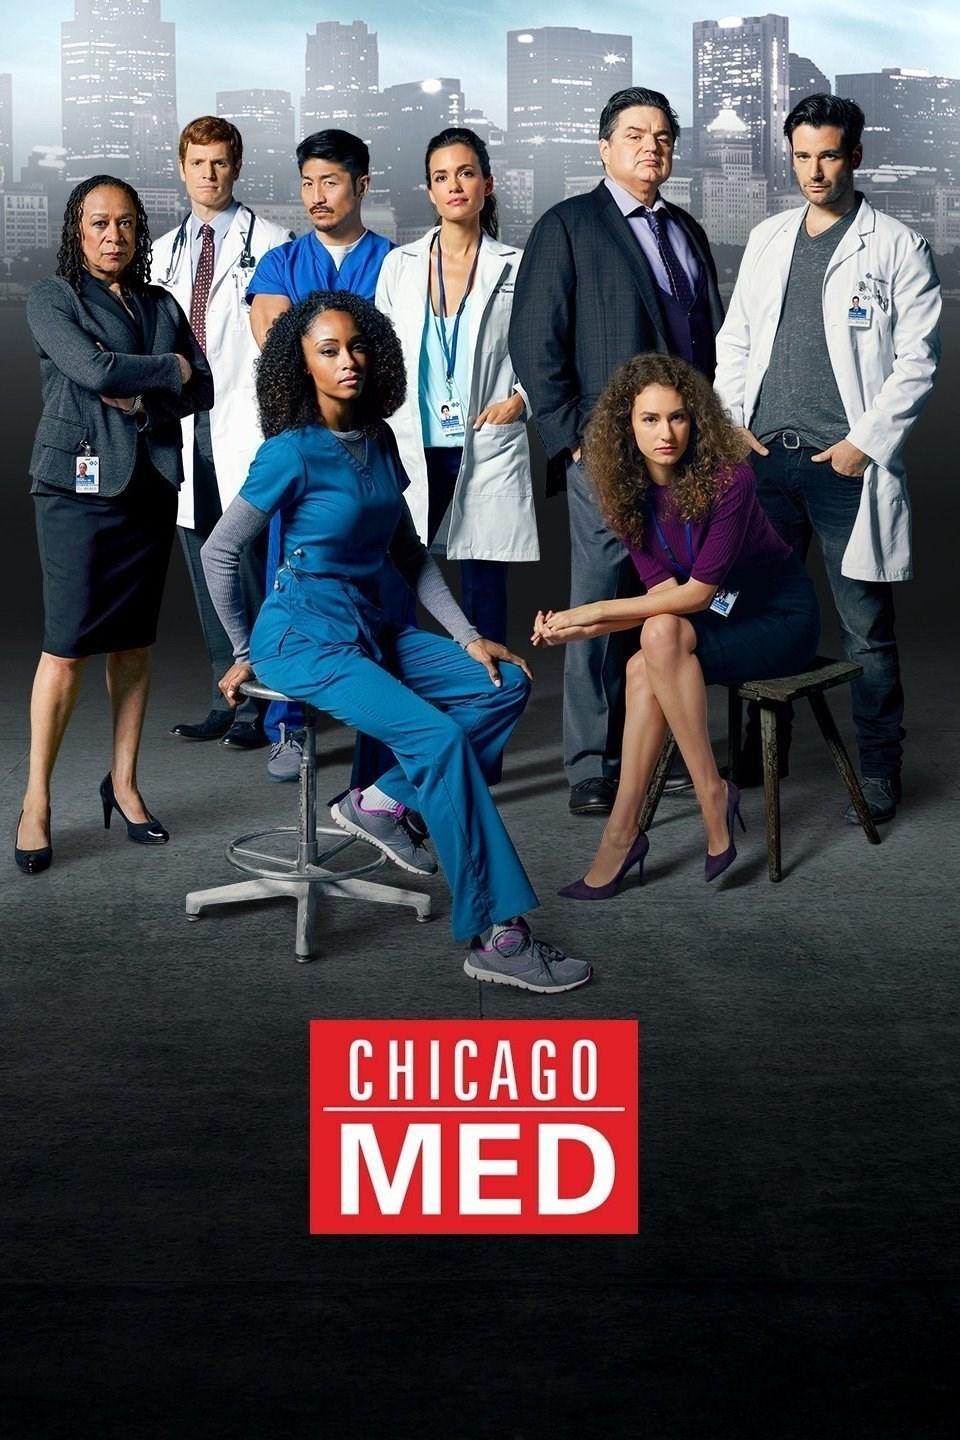 Chicago Med 2015: Season 1